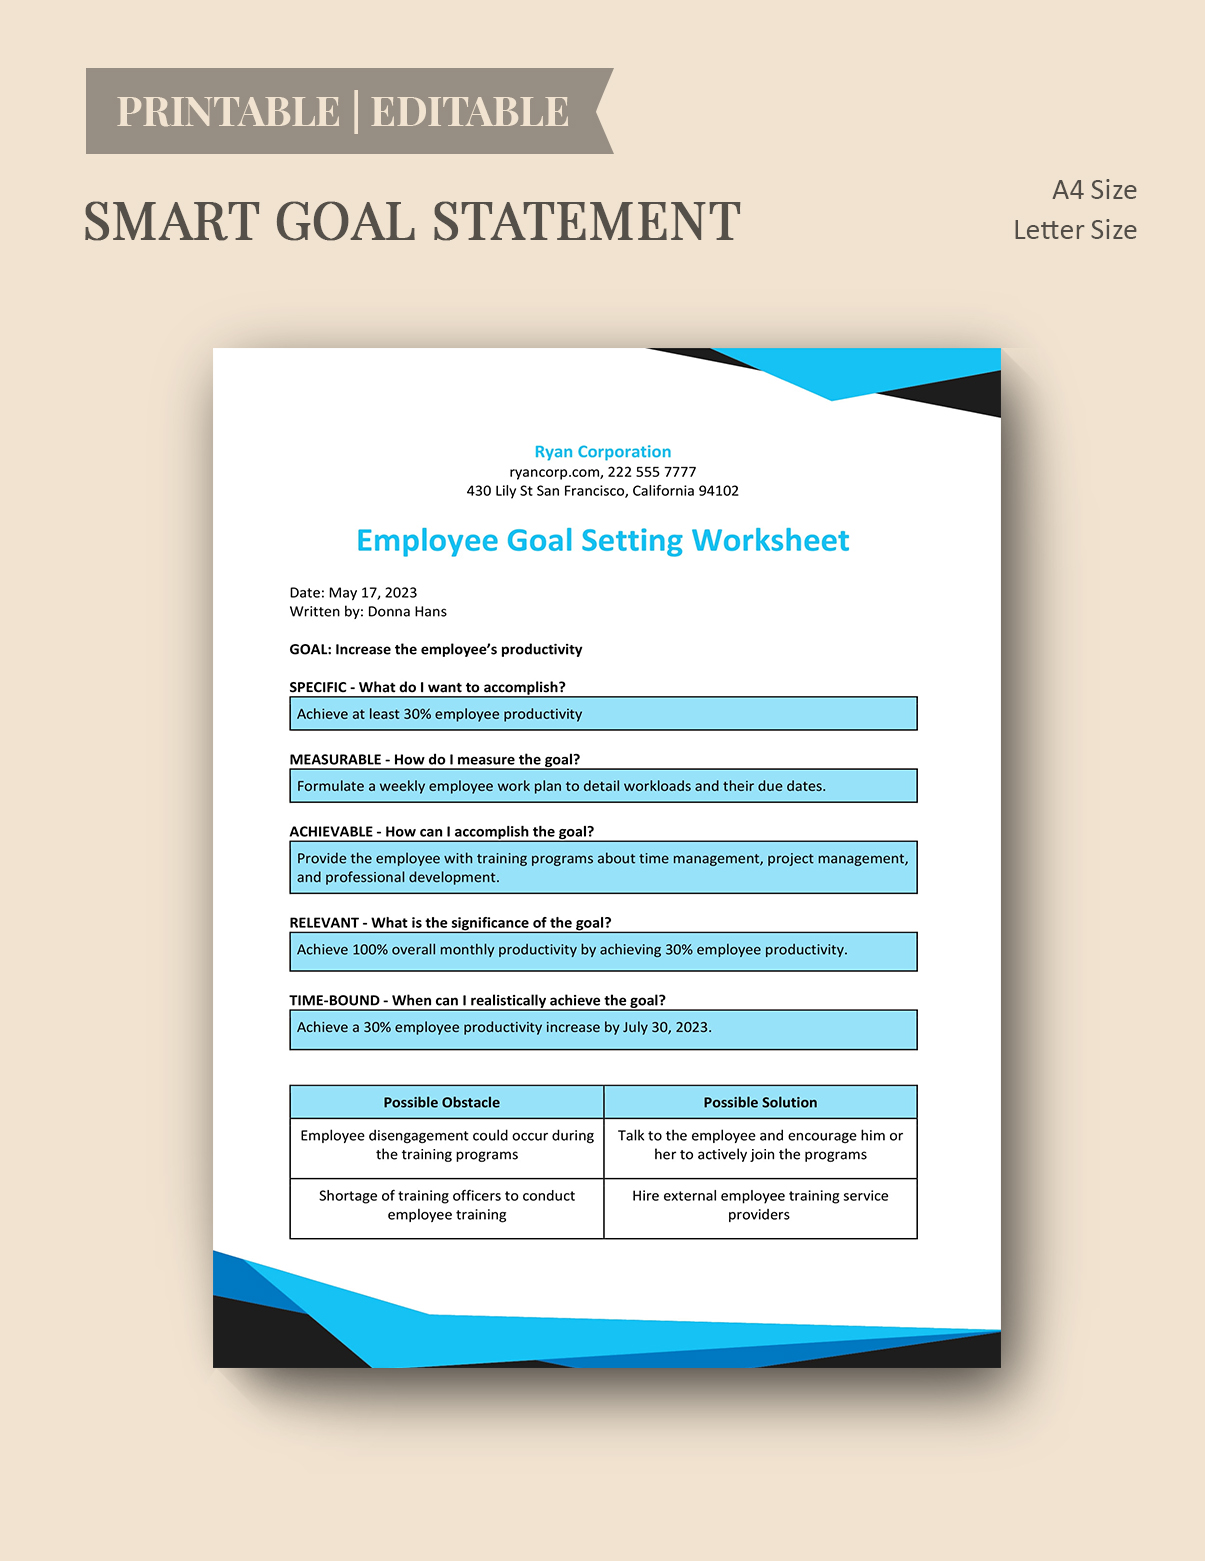 Employee Goal Setting Worksheet Template Download In Word Google Docs Excel PDF PowerPoint 